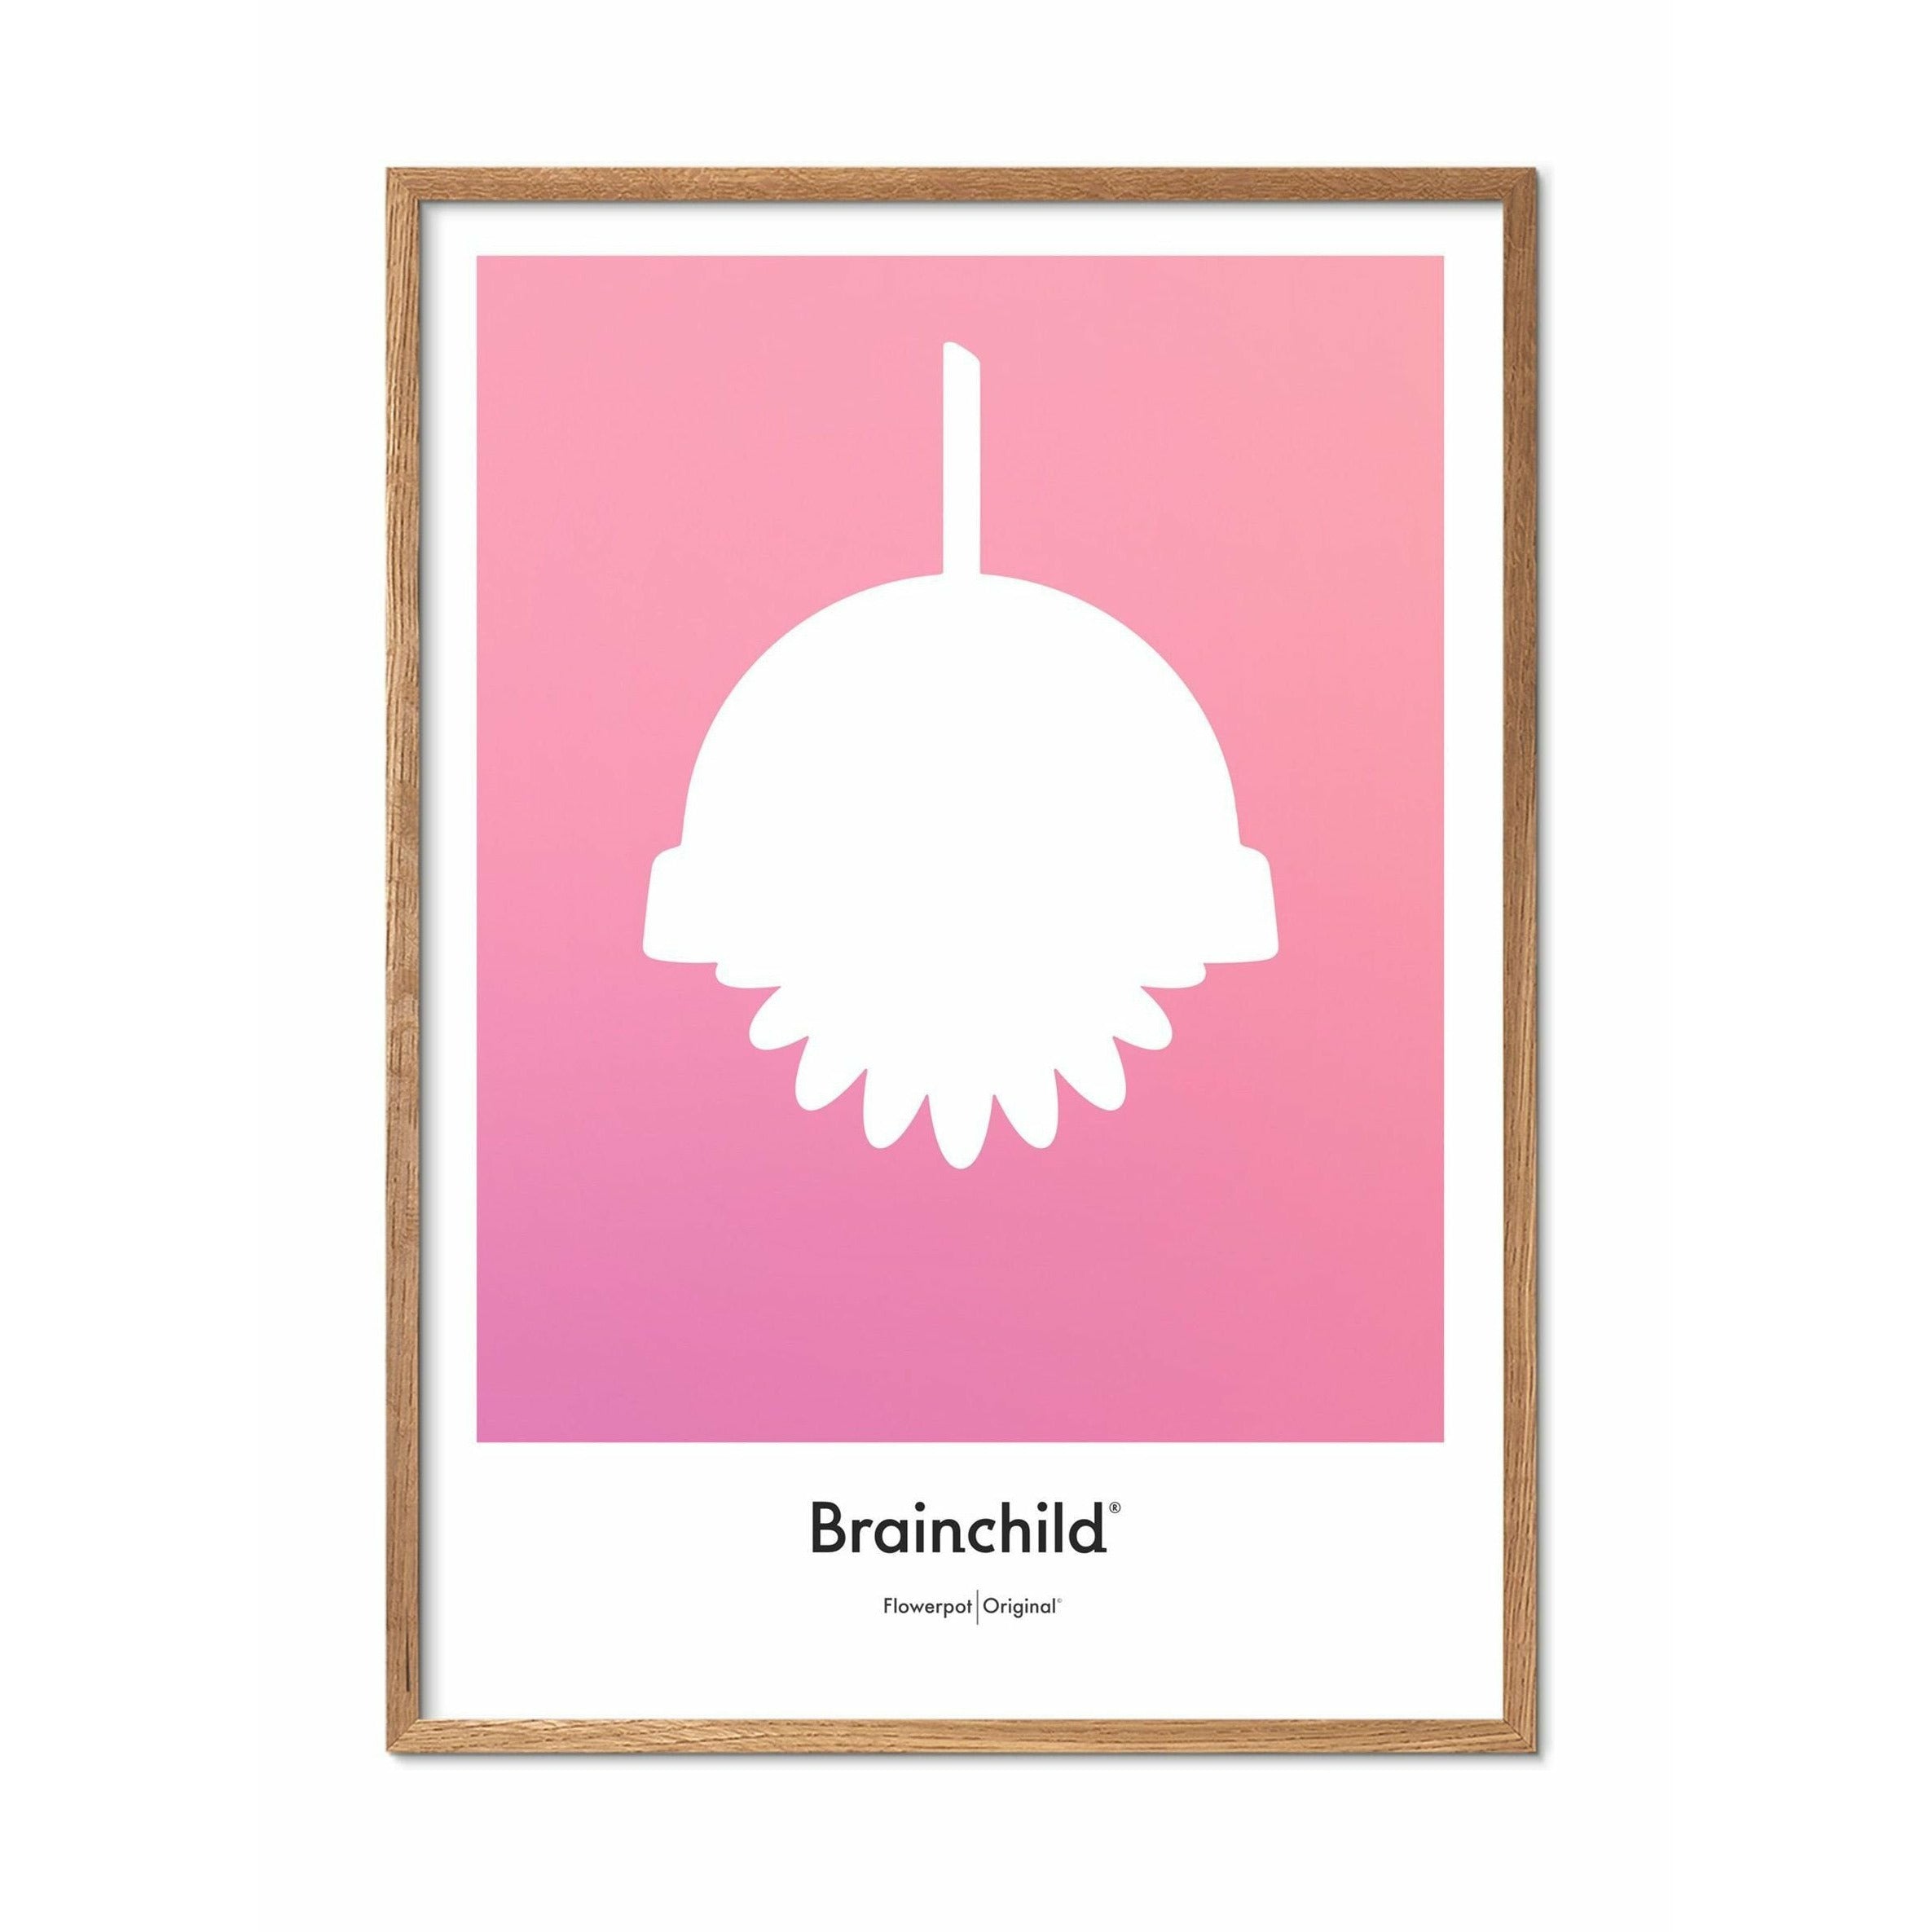 Brainchild Flowerpot Design Icon Poster, Frame Made Of Light Wood 50x70 Cm, Pink